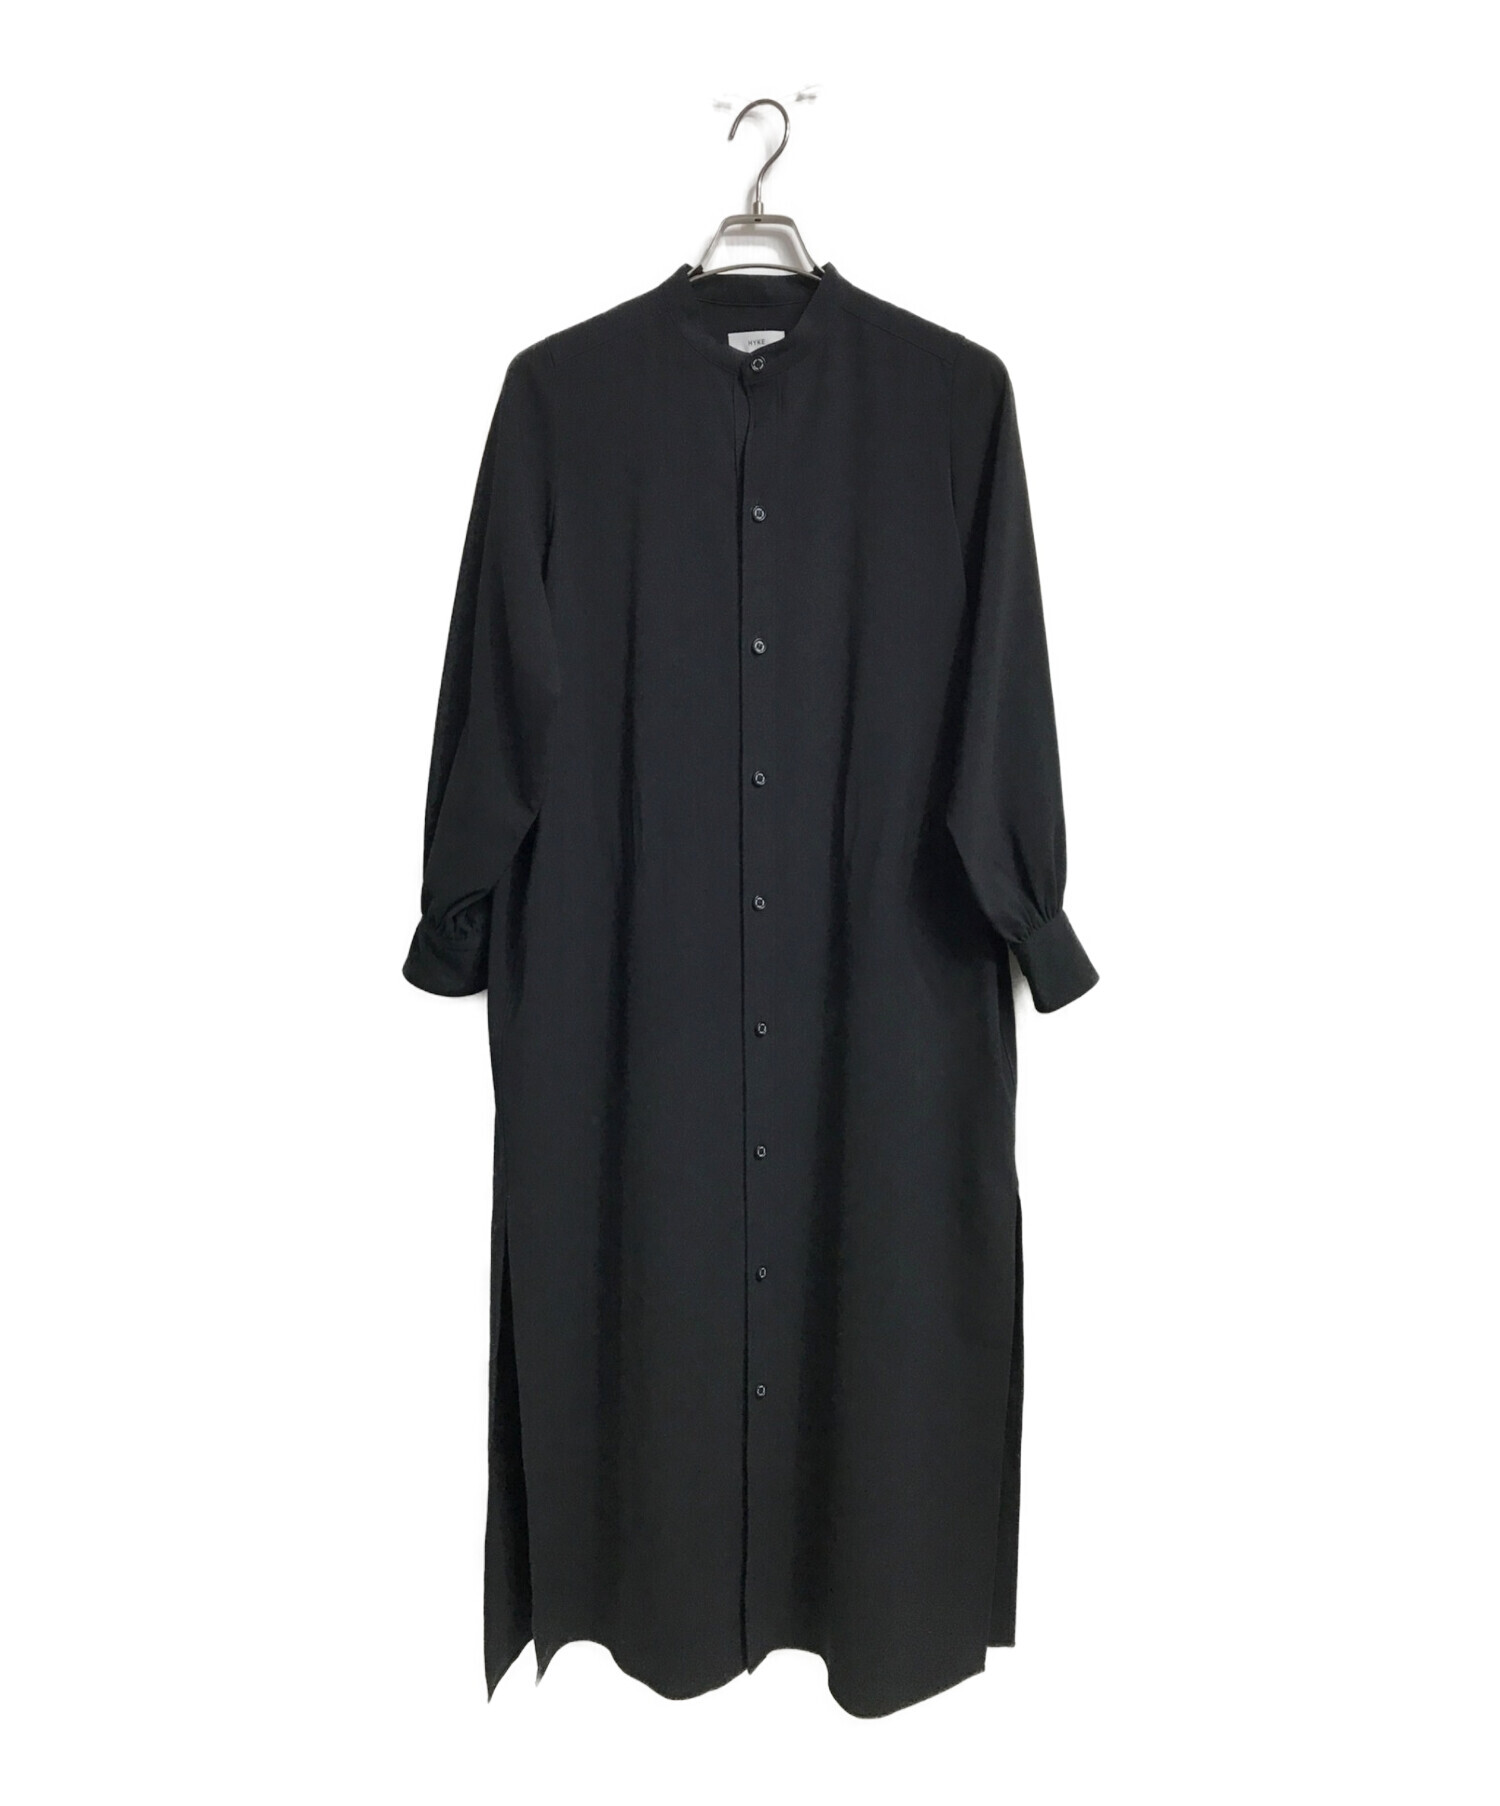 HYKE (ハイク) MAXI SHIRT DRESS ブラック サイズ:S